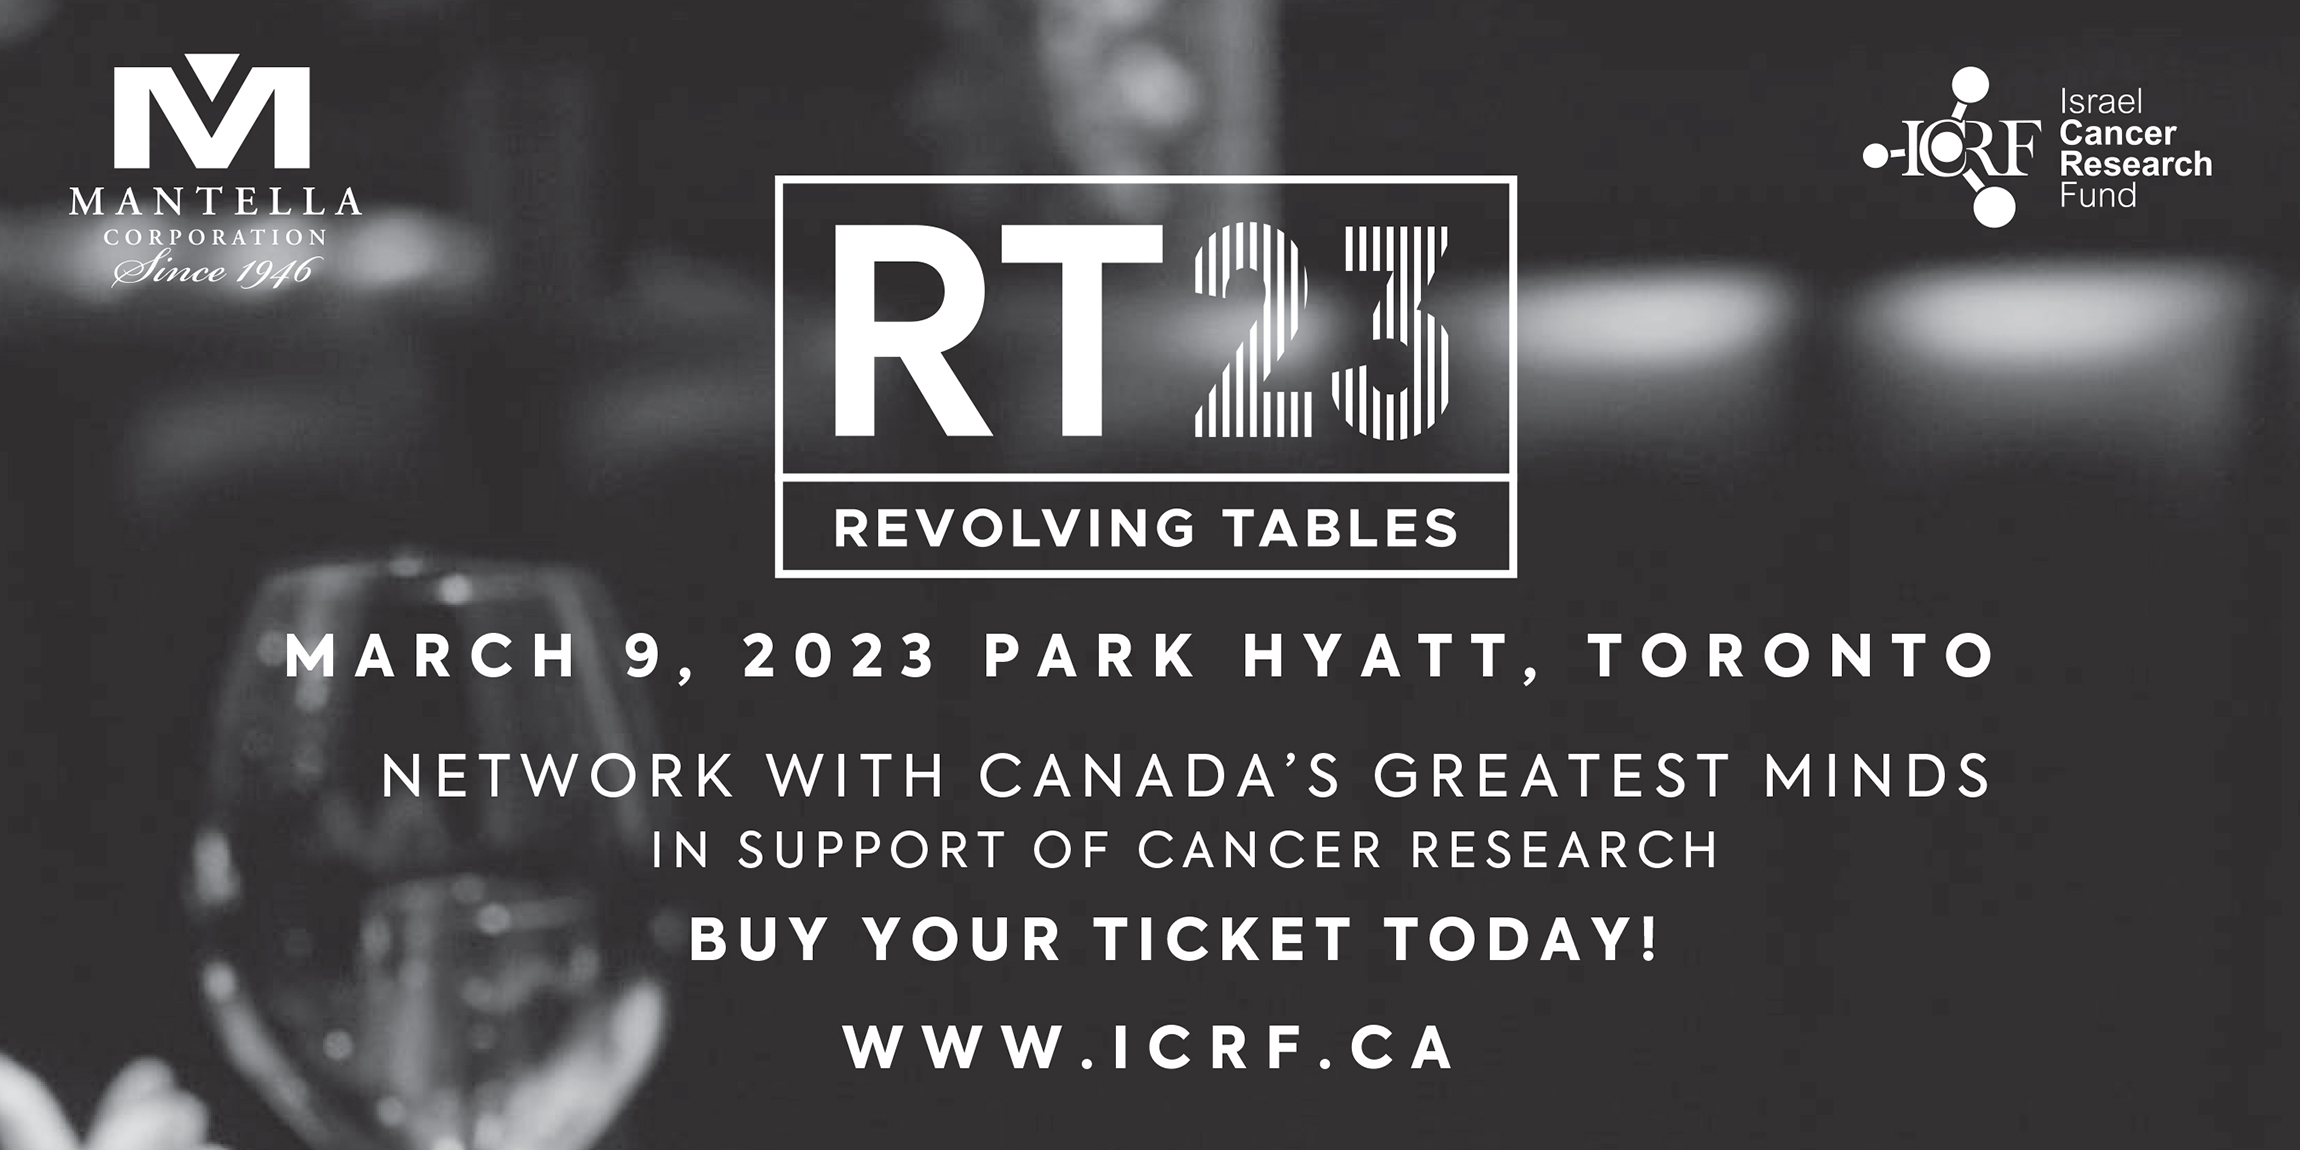 RT23 REVOLVING TABLES